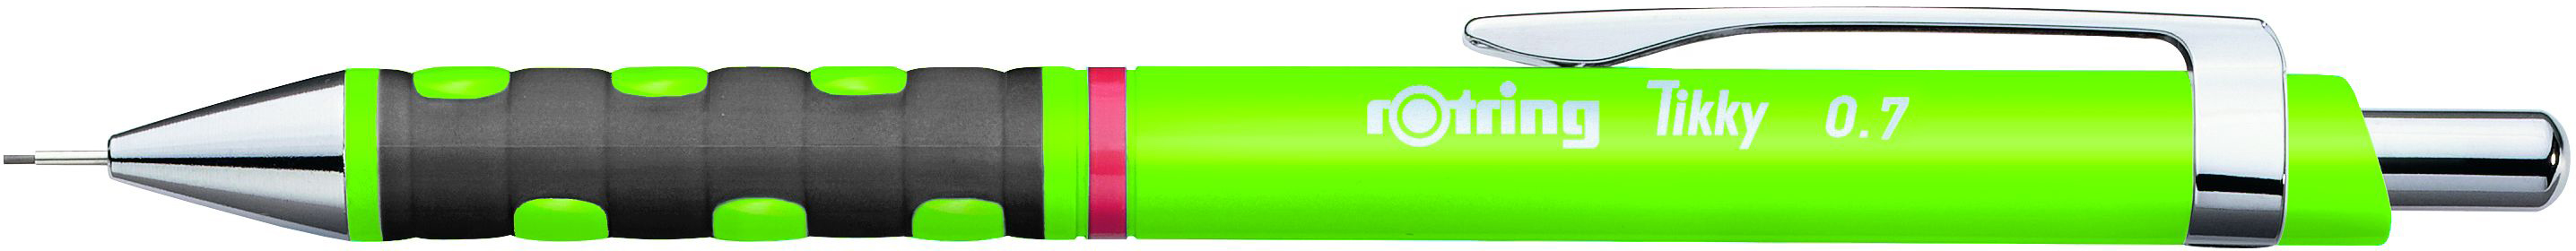 ROTRING Portemines TIKKY 0.7mm 2007216 neon vert